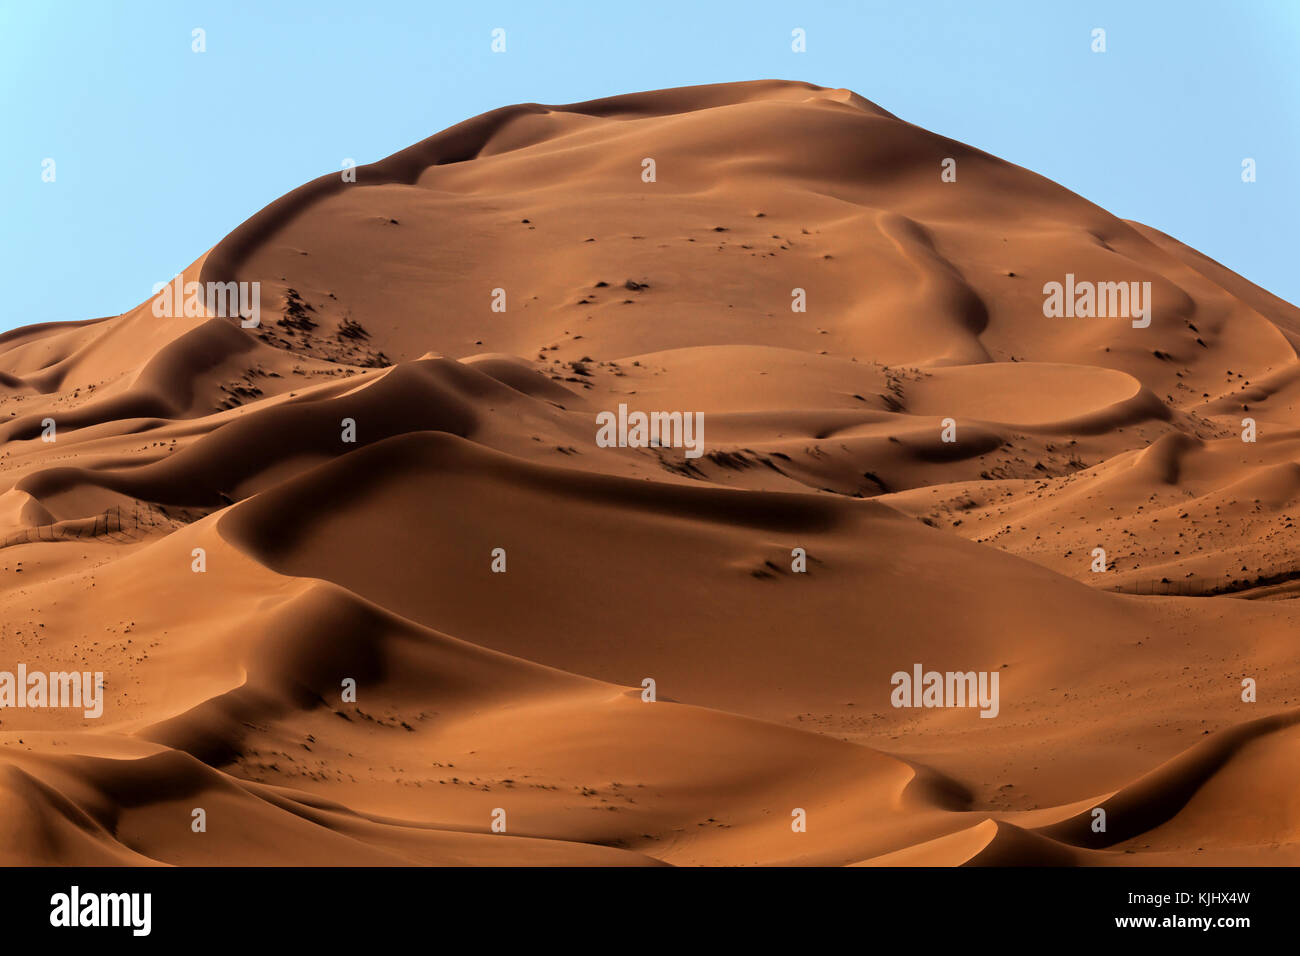 Close-up of sand dunes in the desert, Saudi Arabia Stock Photo